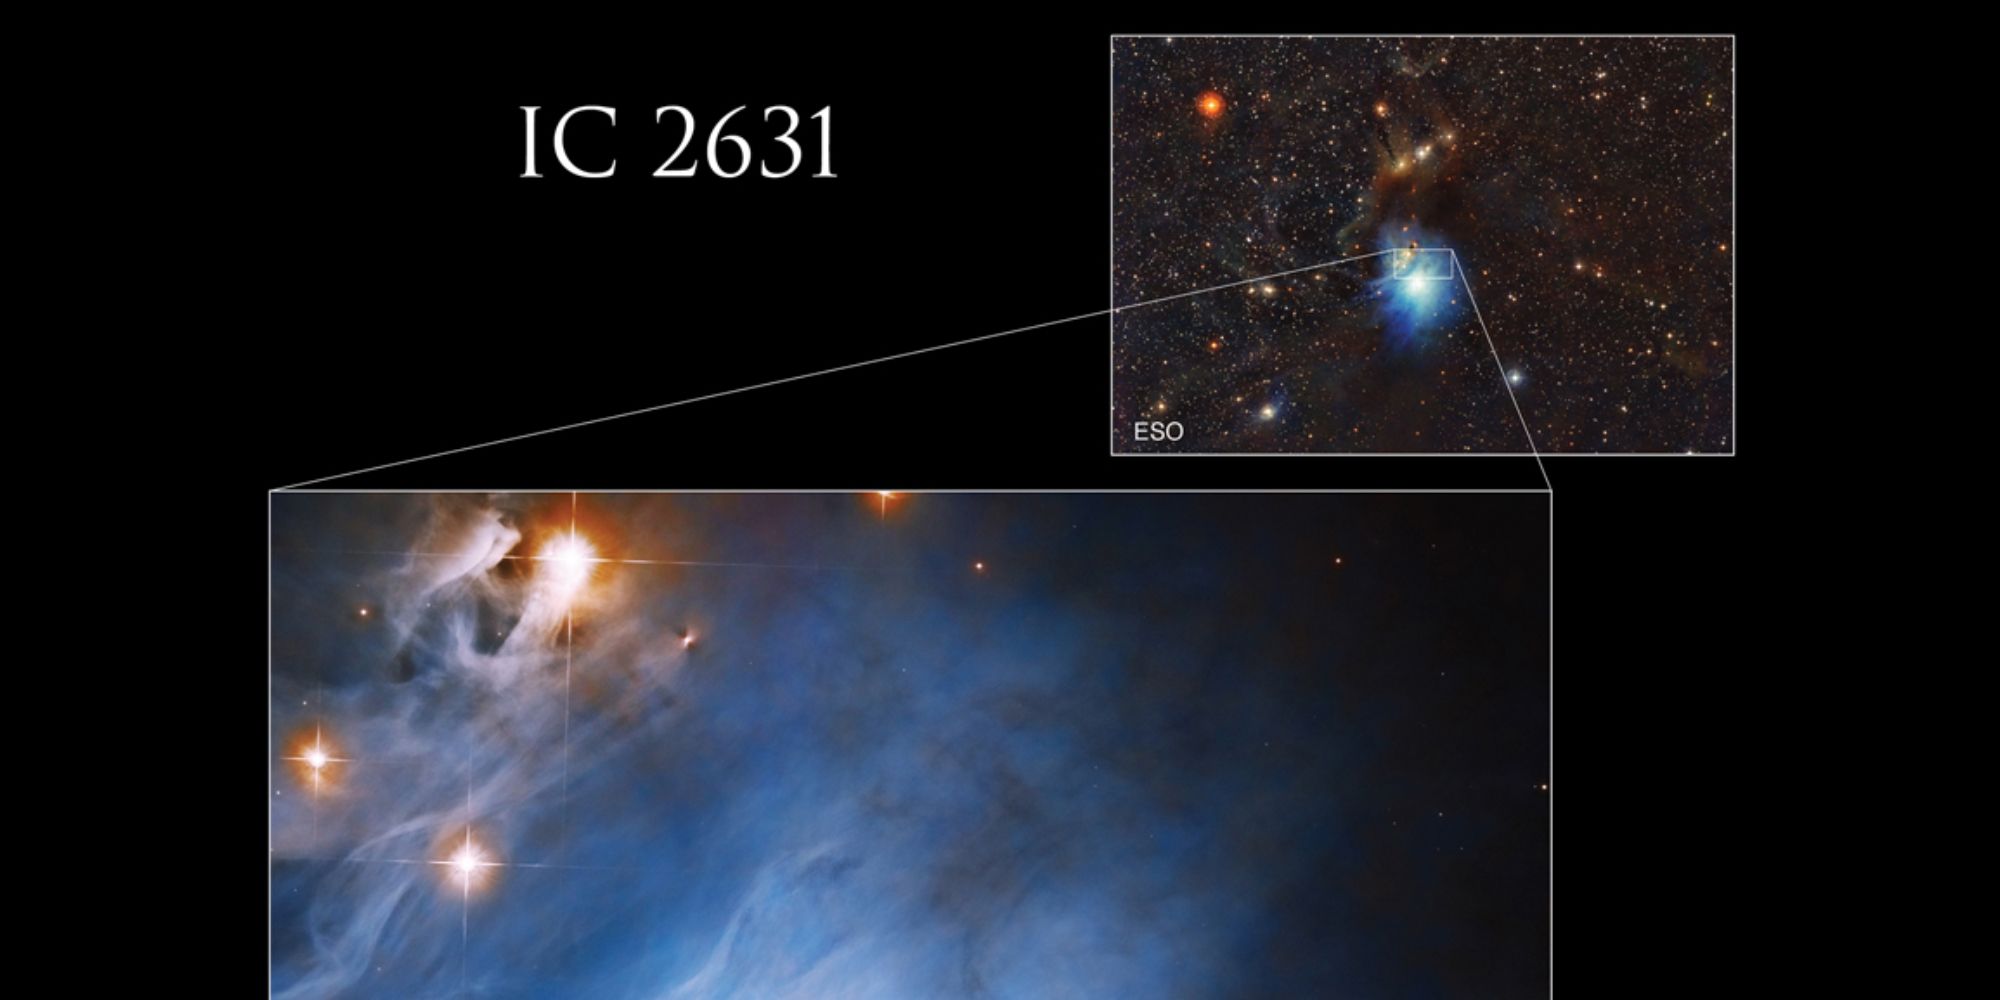 Reflection nebula captured by NASA's Hubble telescope